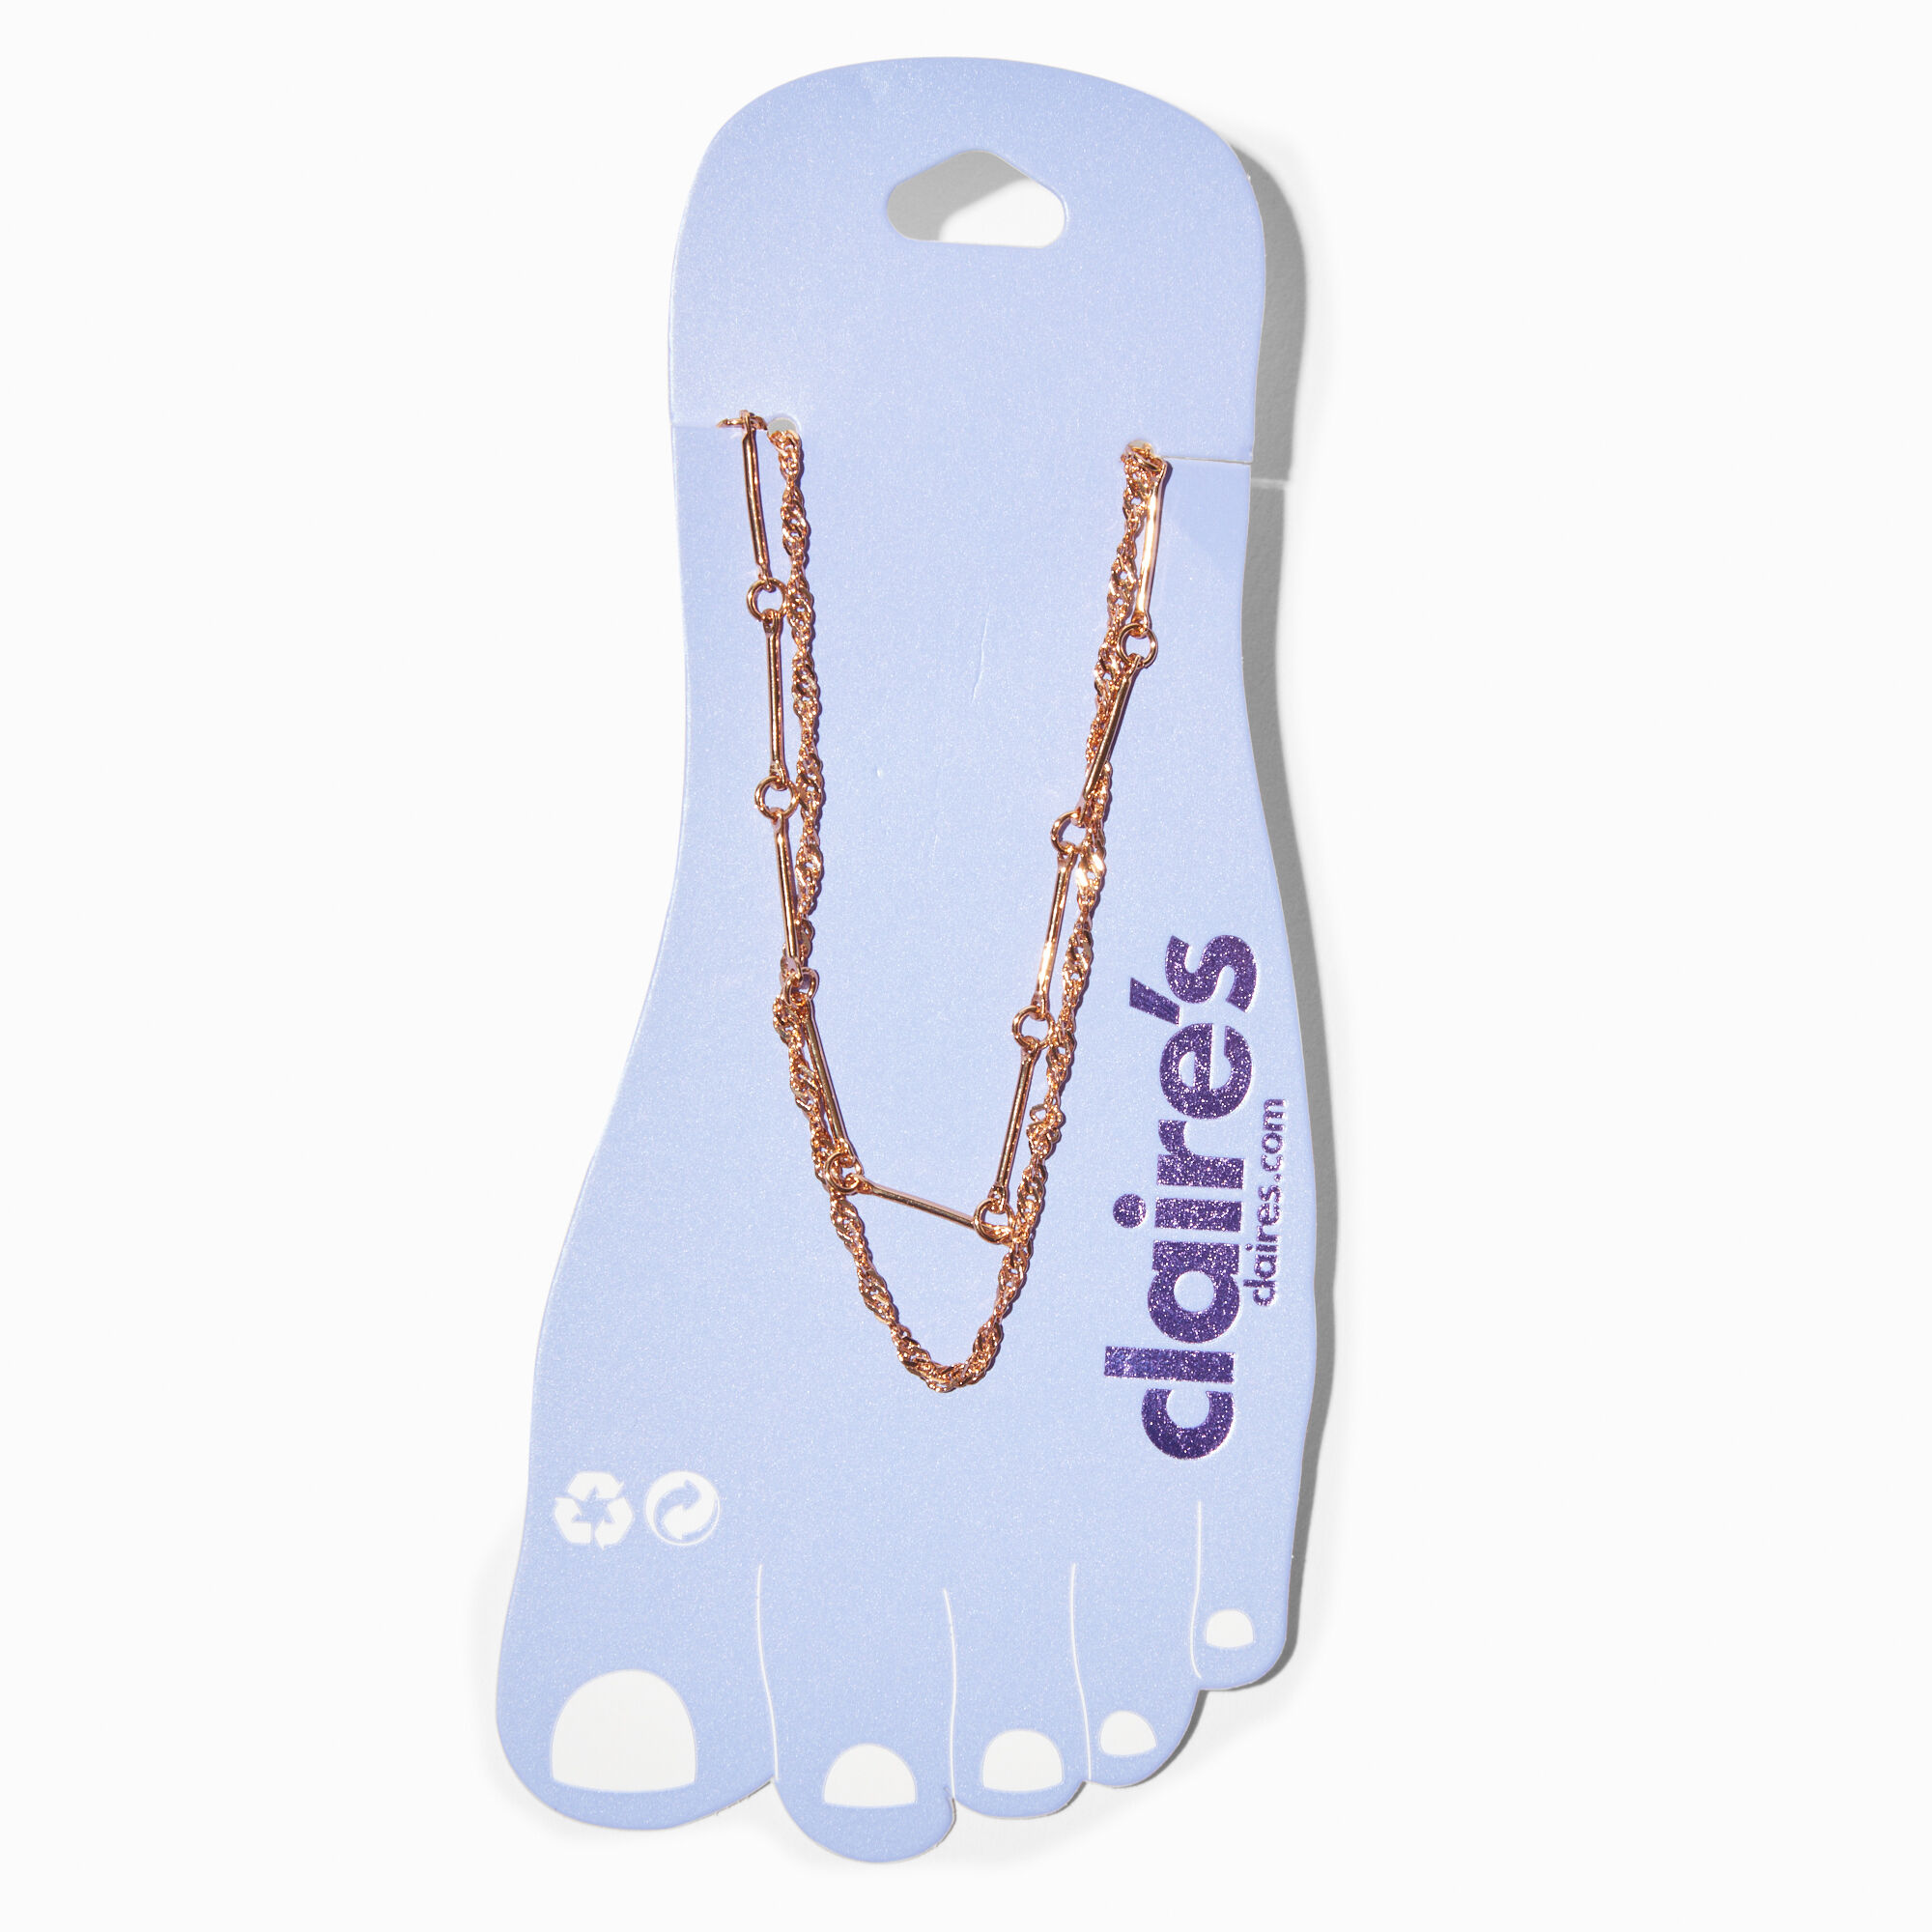 Claire's Chain Bar Anklet Ankle Bracelet | eBay